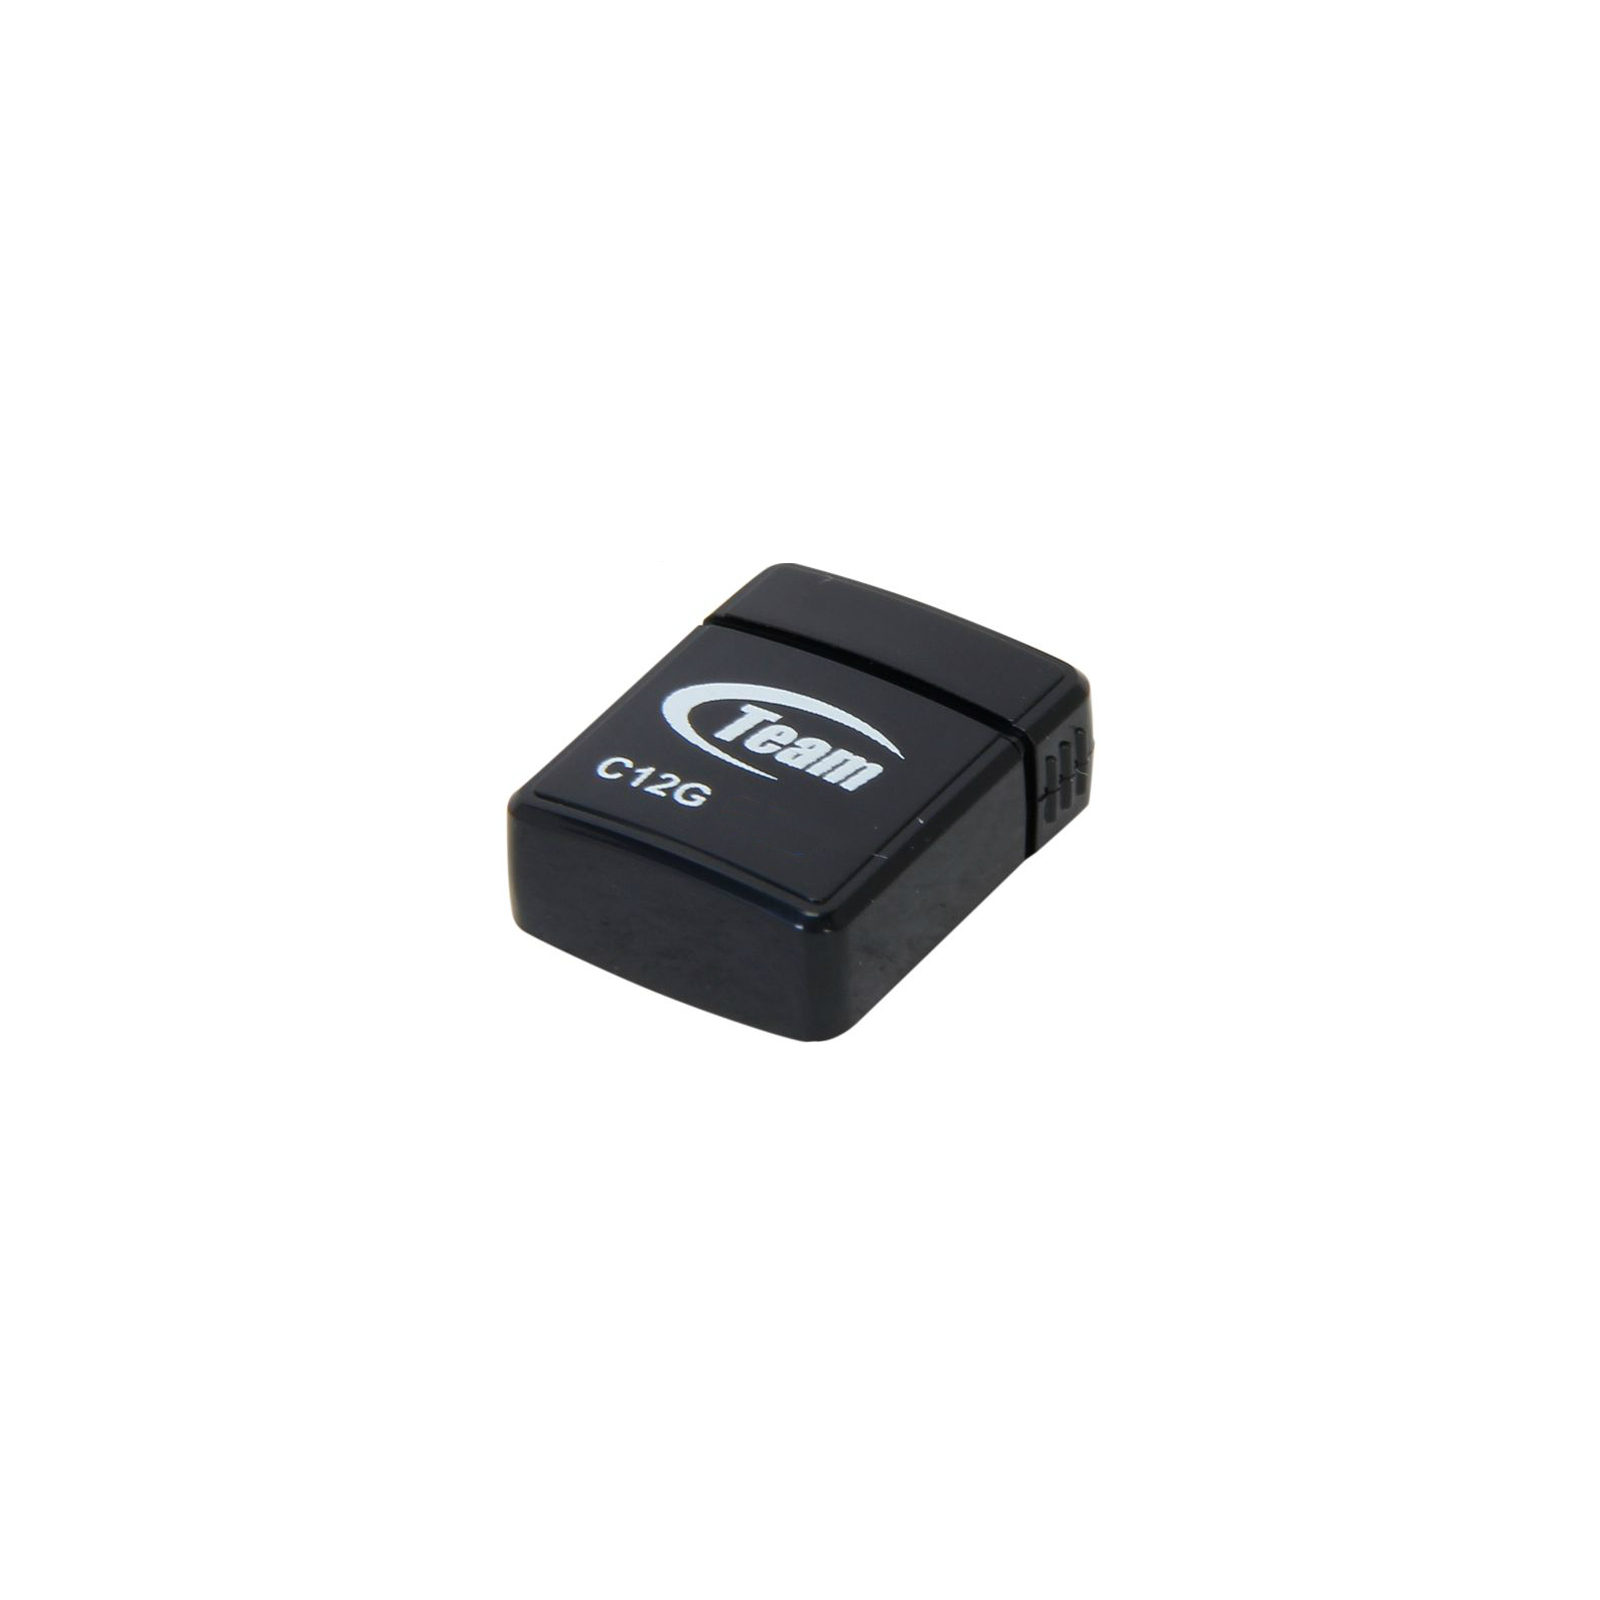 USB флеш накопитель Team 32GB C12G Black USB 2.0 (TC12G32GB01) изображение 2